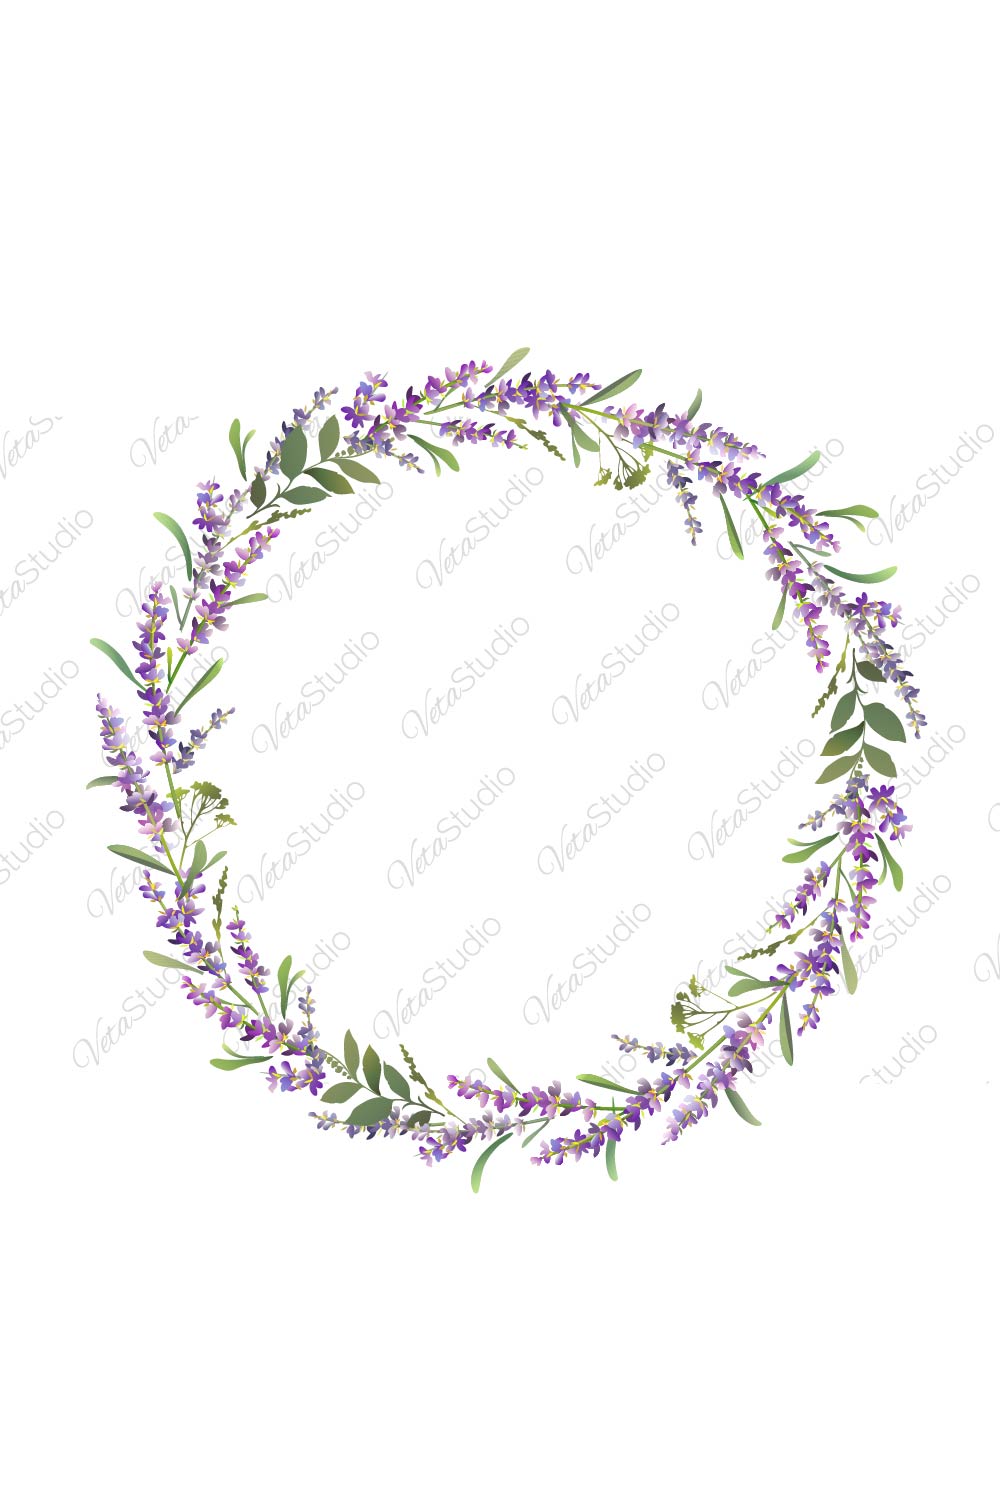 Lavender Wreath Vector Design - Only 6$ pinterest preview image.